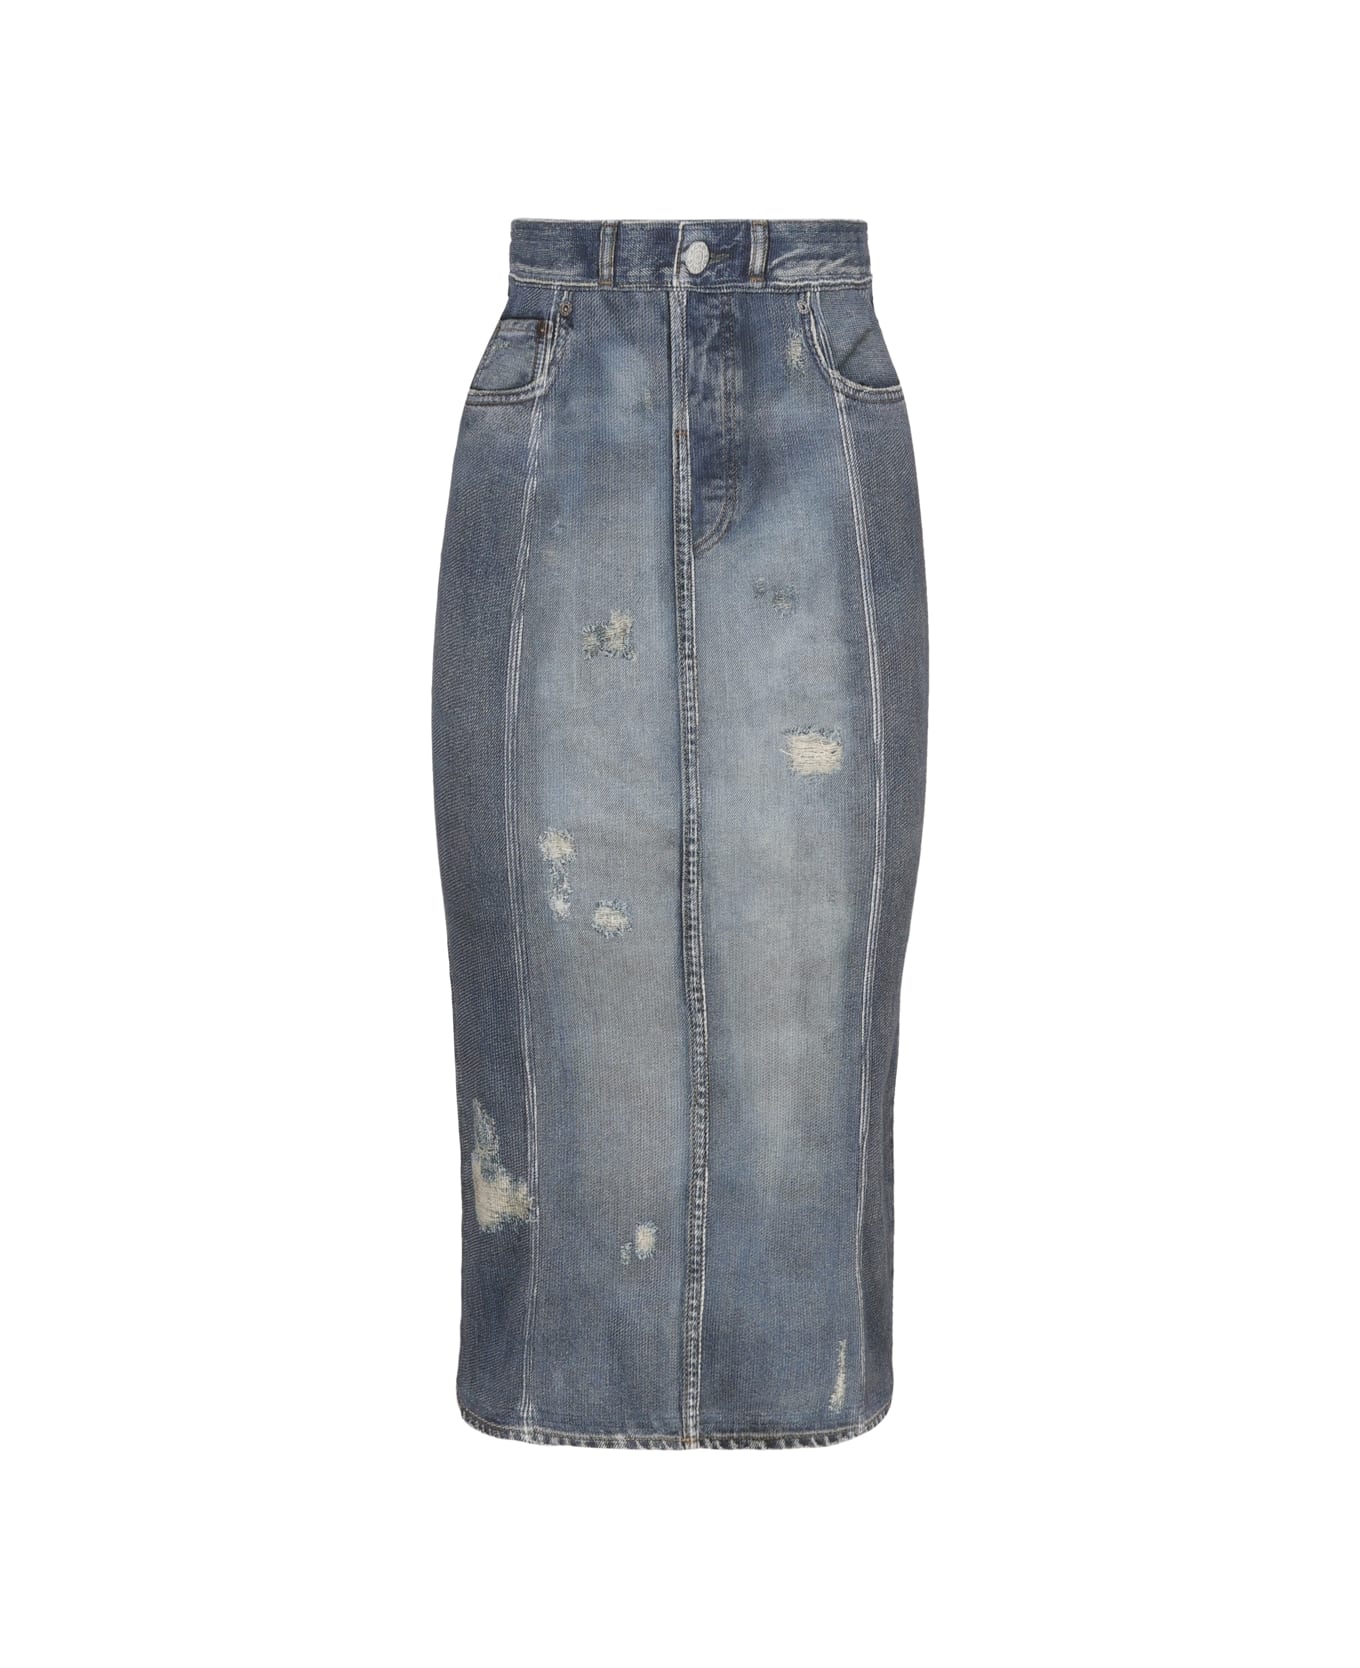 Acne Studios Denim Skirt - Denim blue スカート